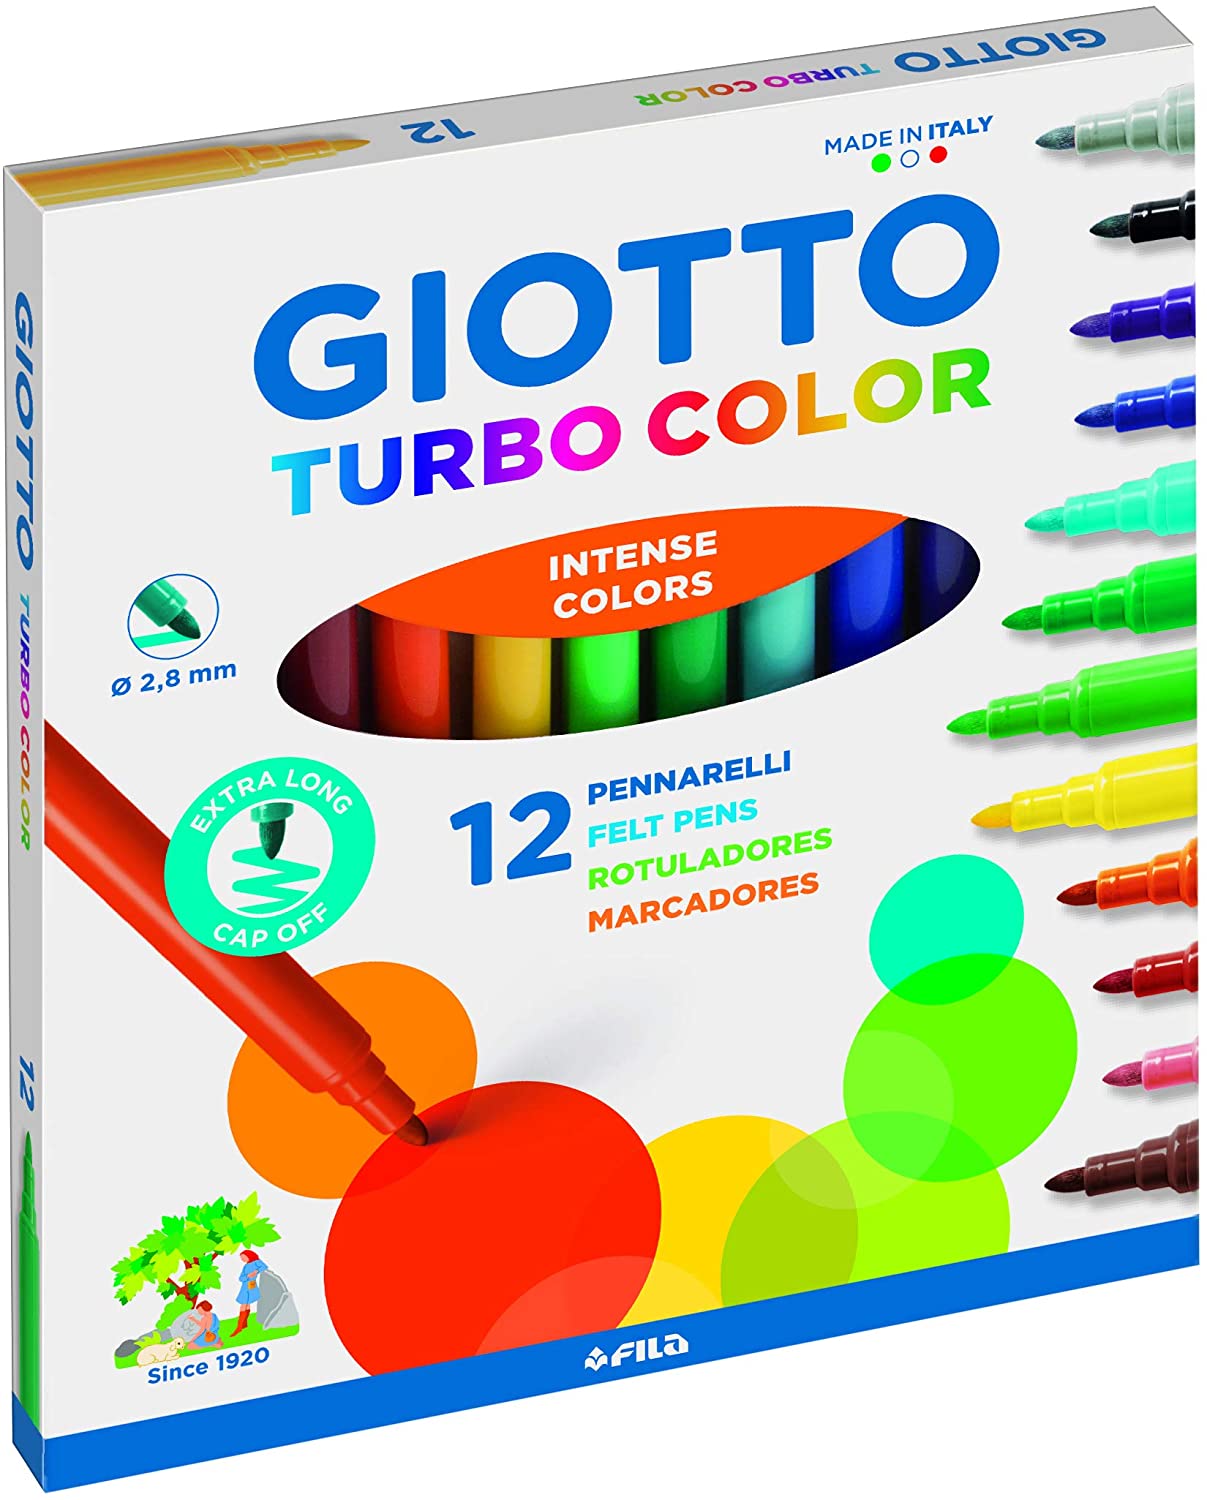 Giotto Turbo Color Pack de 12 Rotuladores - Punta Fina 2.8 mm - Tinta al Agua - Colores Surtidos - Lavable